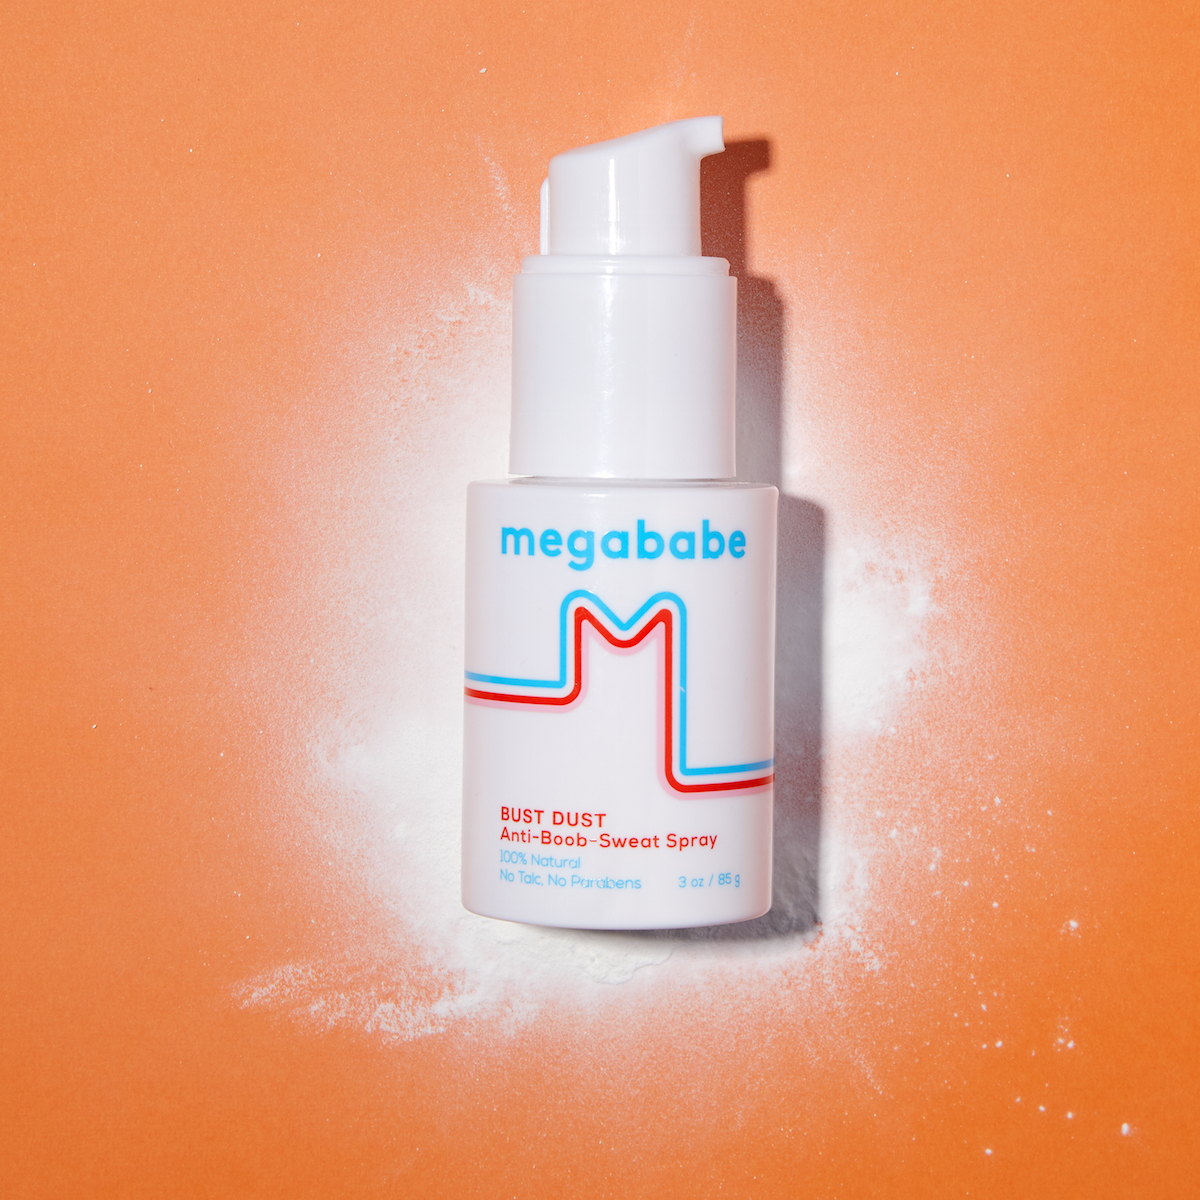 Megababe's anti-boob-sweat spray